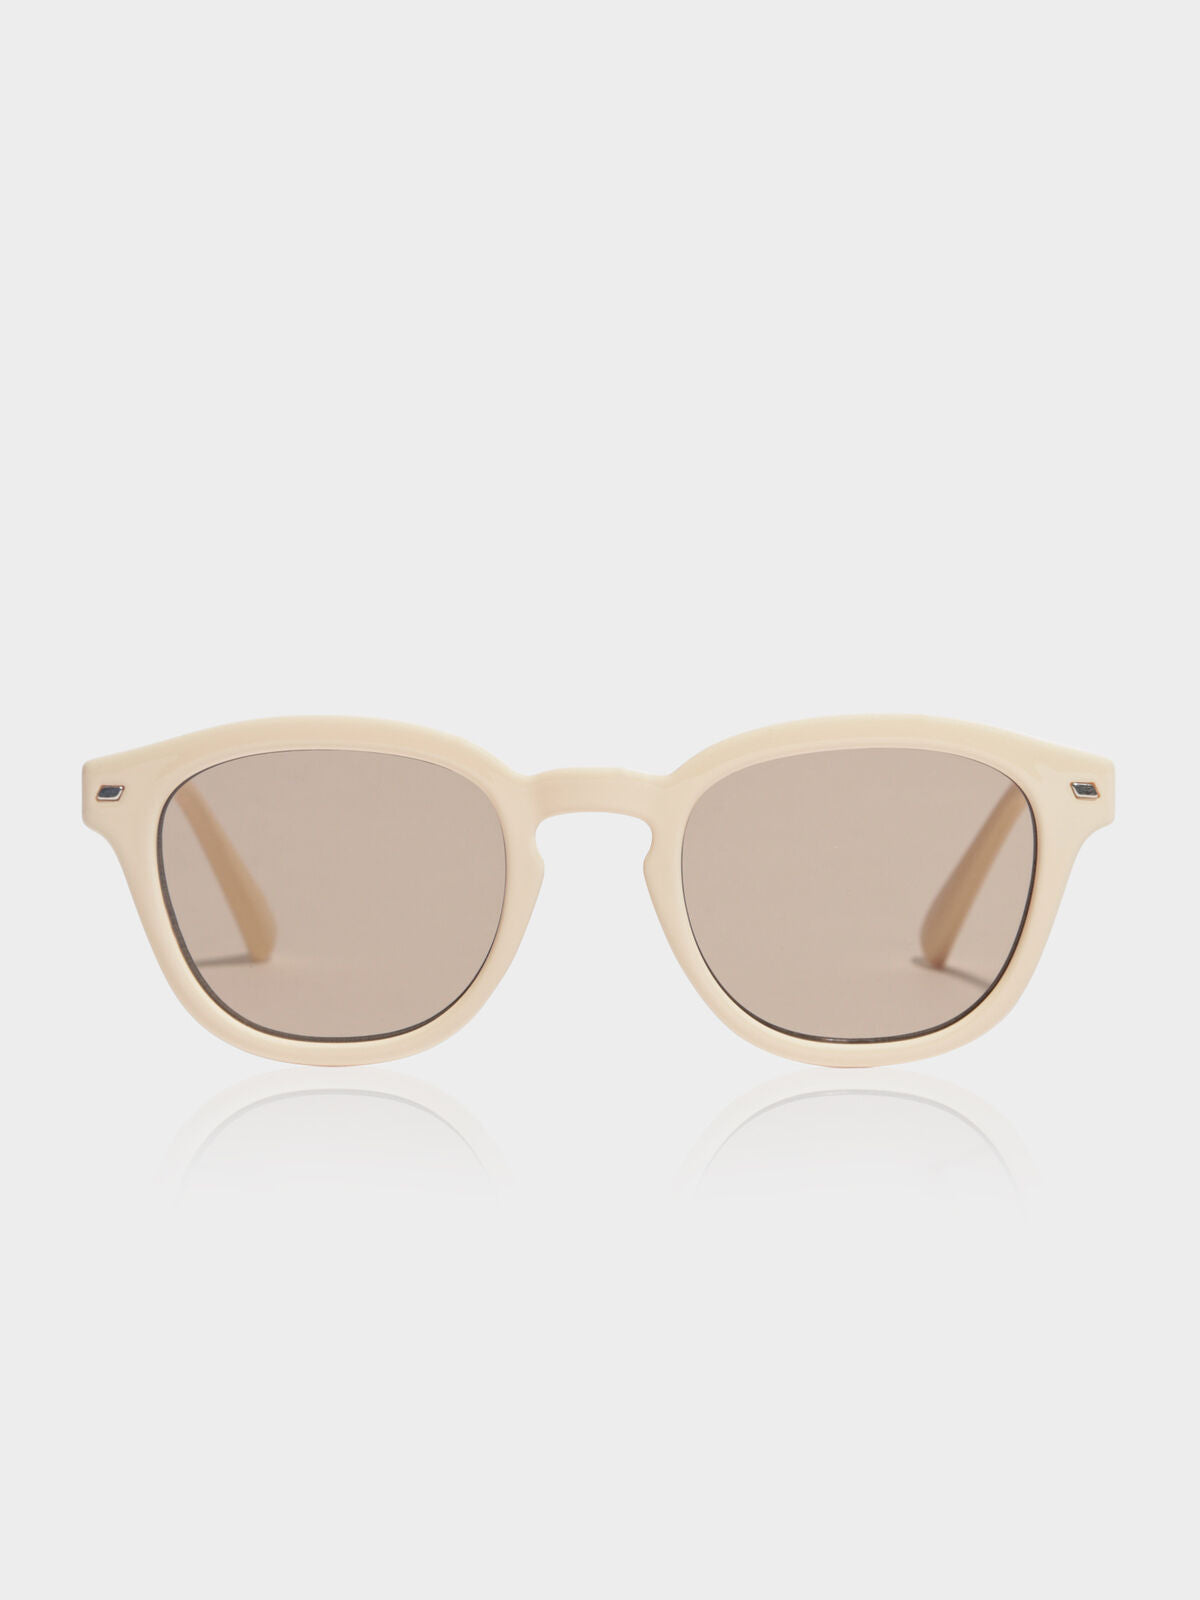 Conga Sunglasses in Ivory